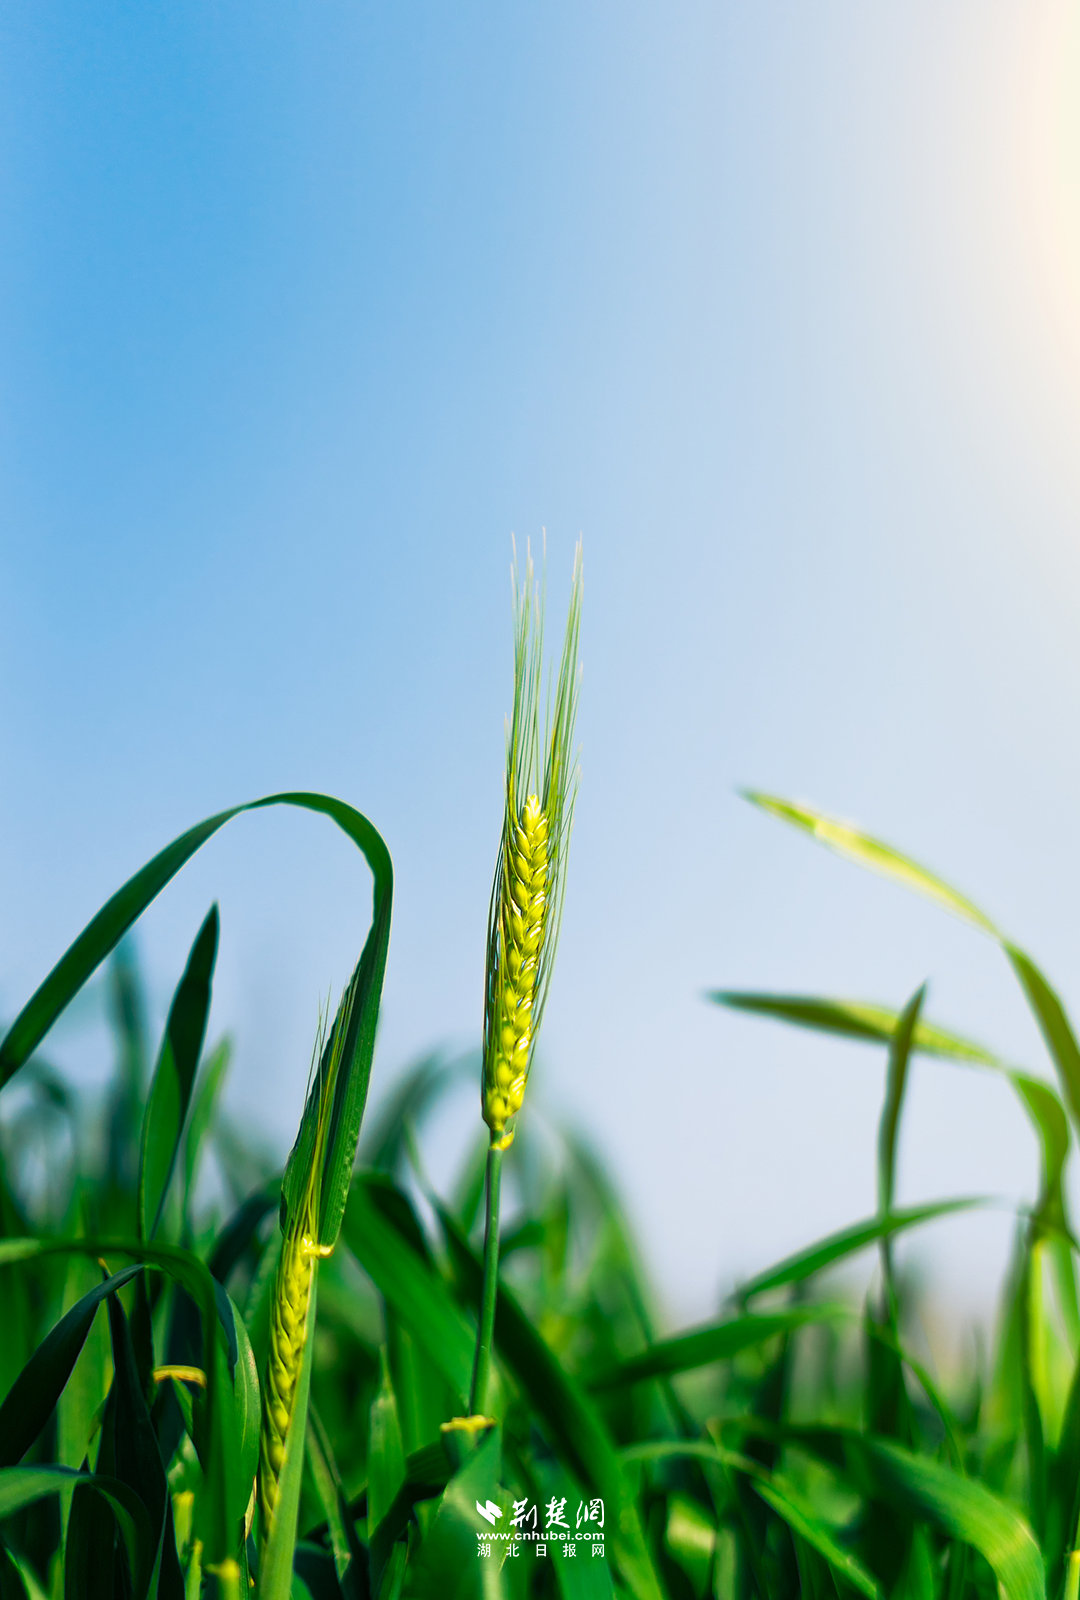 Free Images : farm, barley, prairie, crop, agriculture, farmland ...